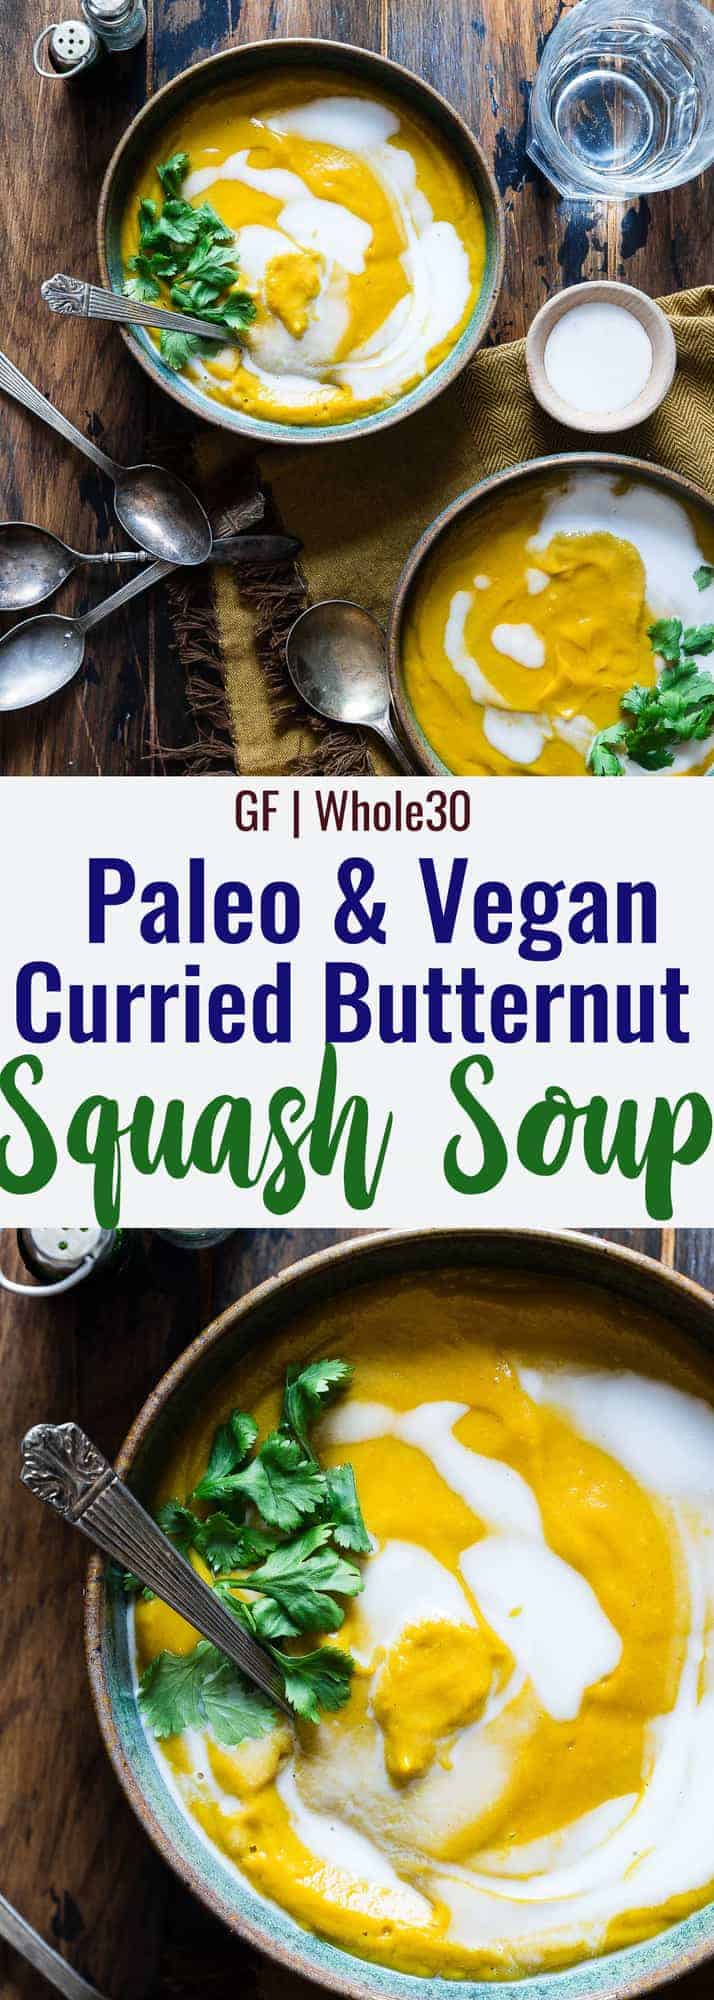 Paleo Butternut Squash Soup collage photo